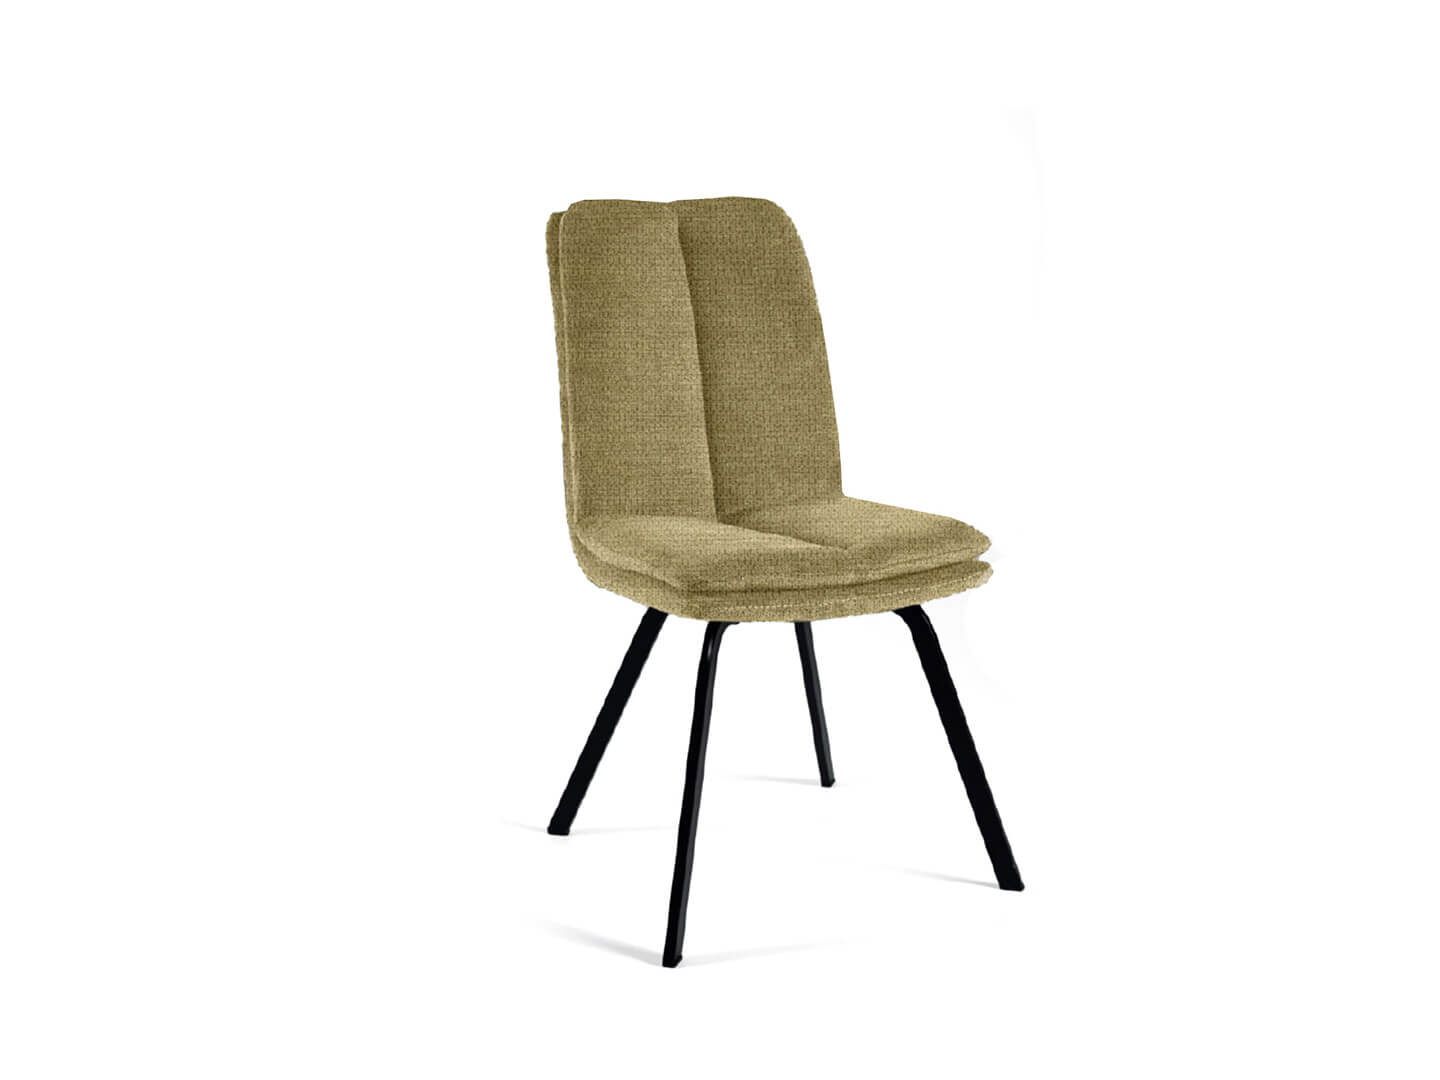 meri dining chair / Lime green